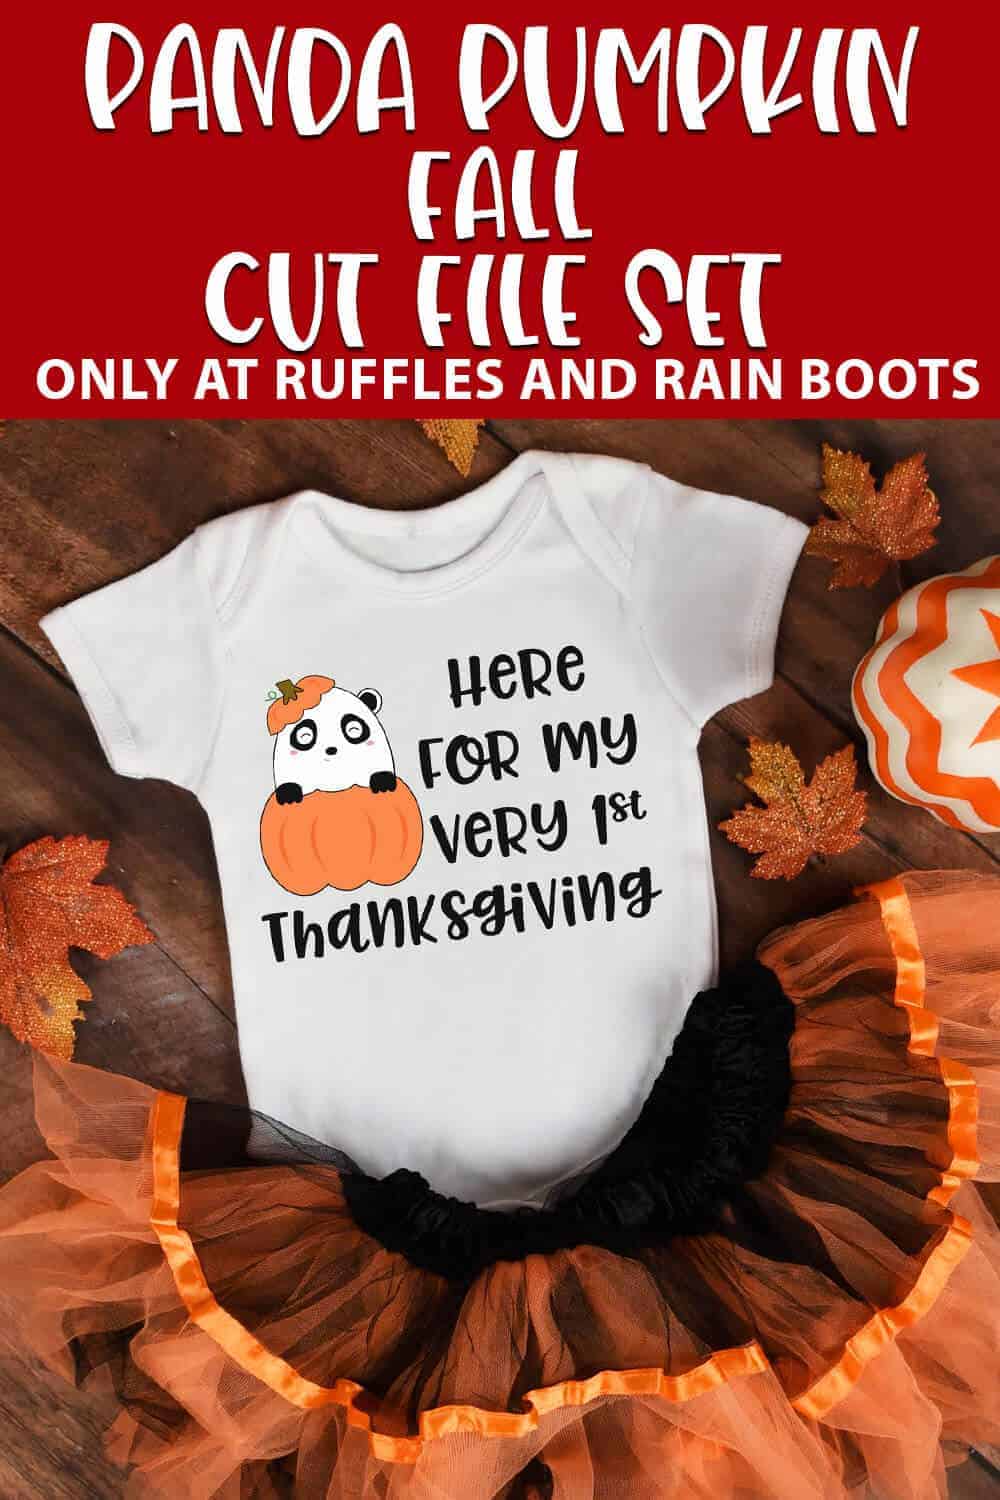 onesie featuring cute first thanksgiving panda in a pumpkin SVG with text which reads panda pumpkin fall cut file set 